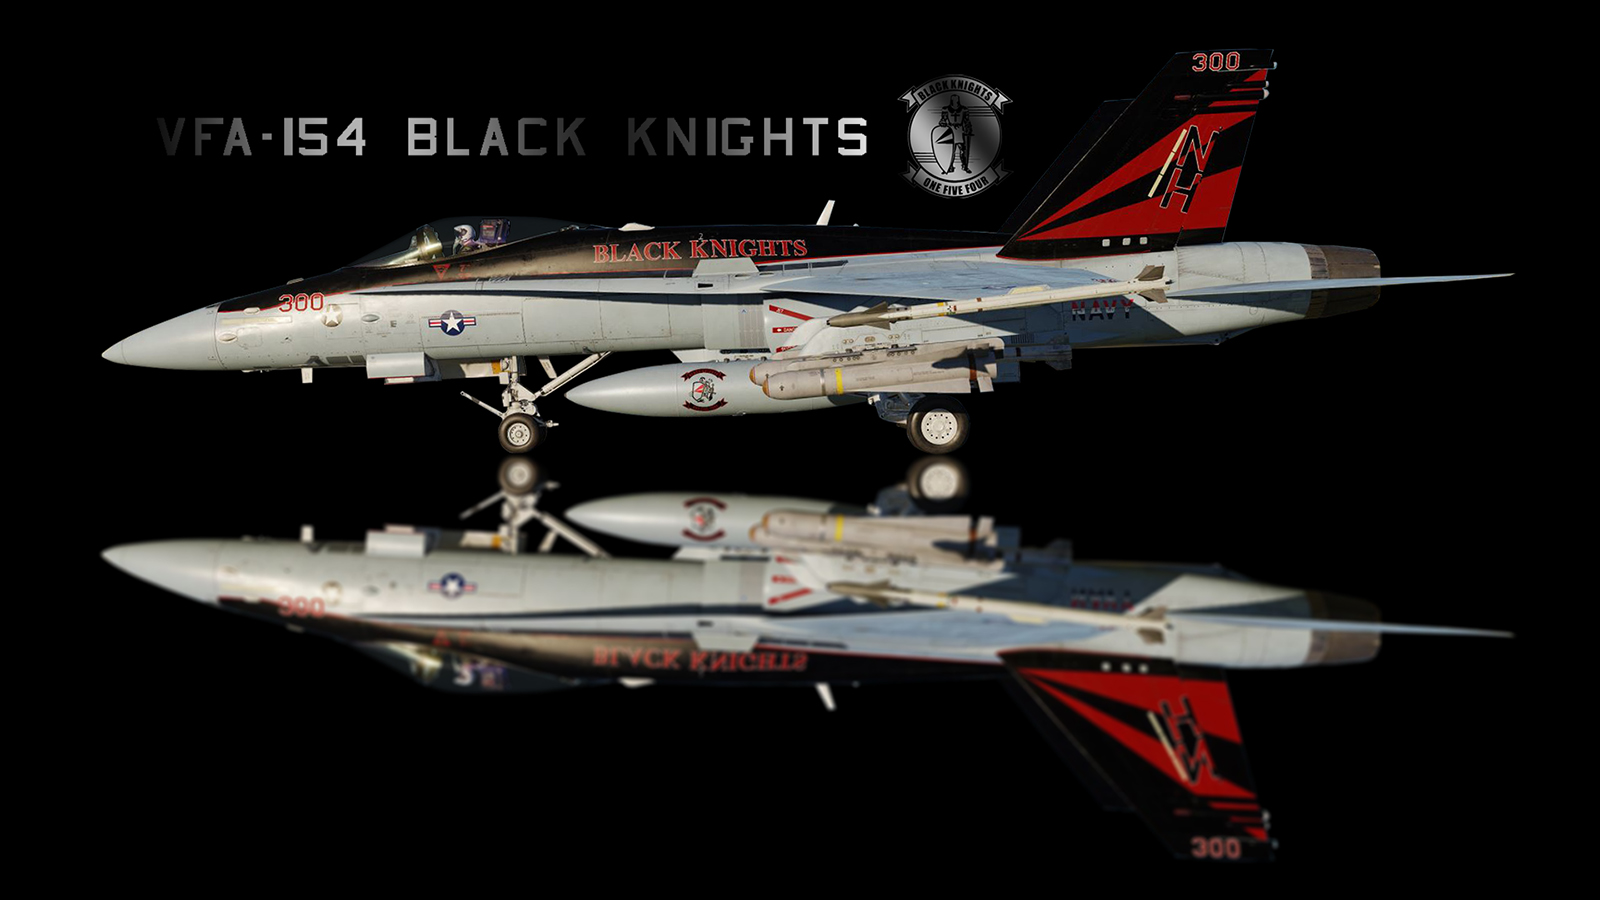 VFA-154 Black Knights